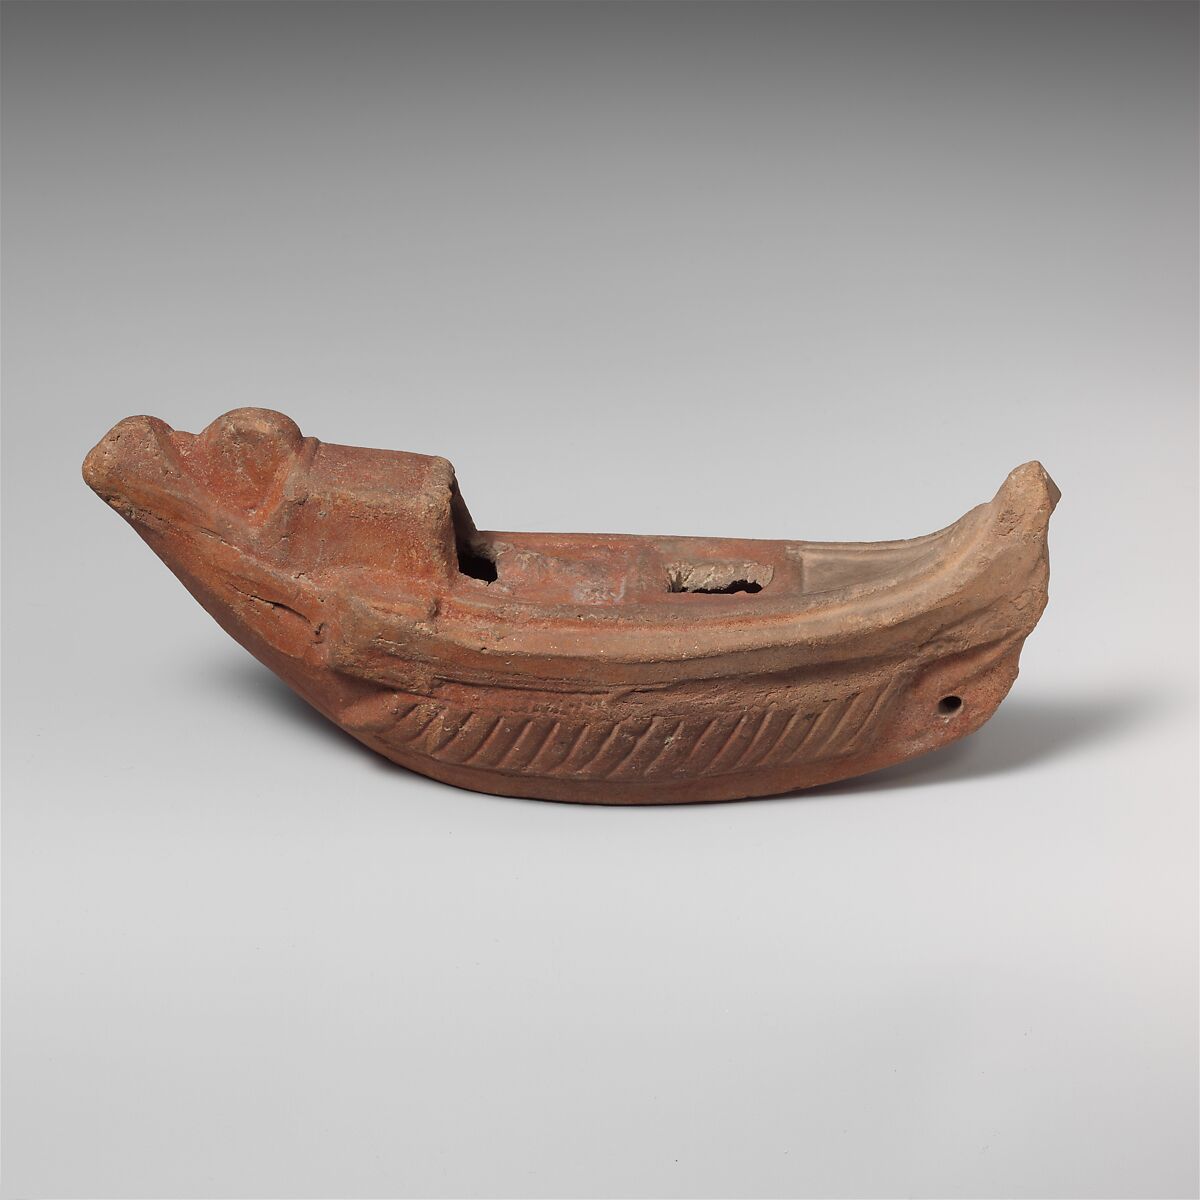 Terracotta oil lamp in the shape of a boat, Terracotta, Roman, Egyptian 